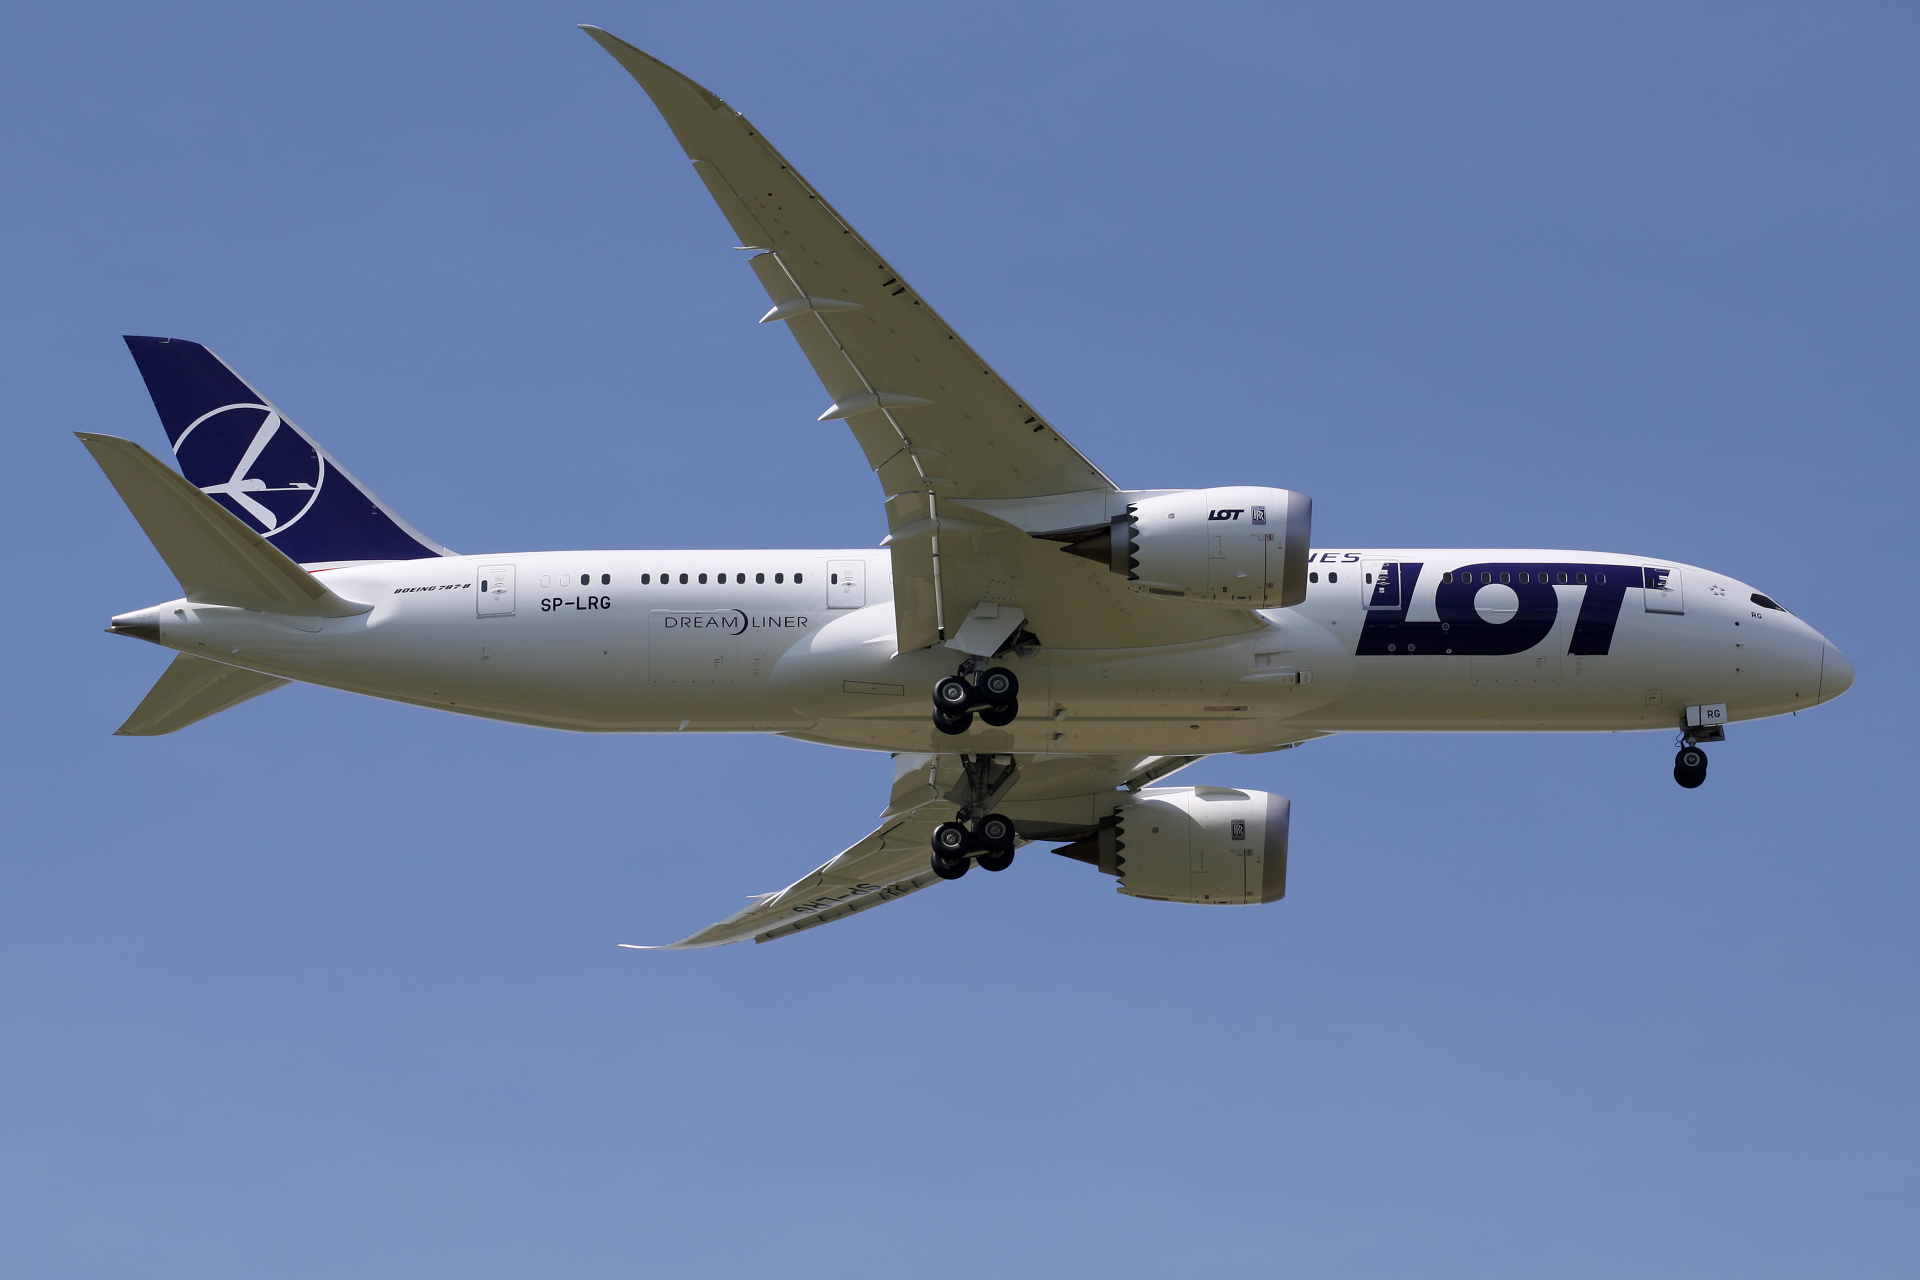 SP-LRG (Samoloty » Spotting na EPWA » Boeing 787-8 Dreamliner » Polskie Linie Lotnicze LOT)